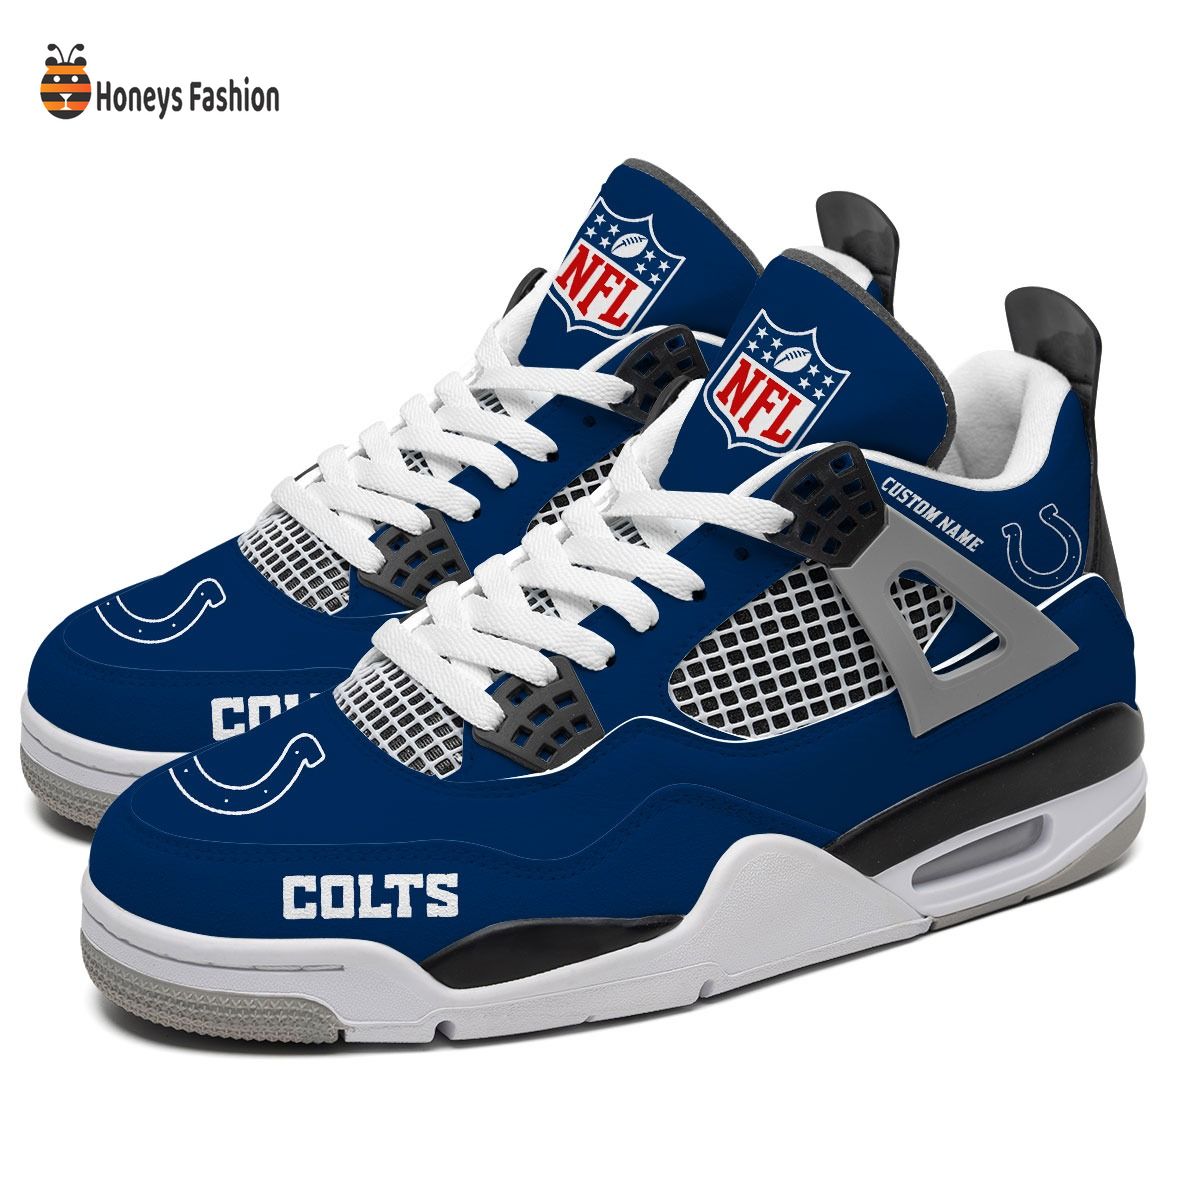 Indianapolis Colts NFL Air Jordan 4 Shoes